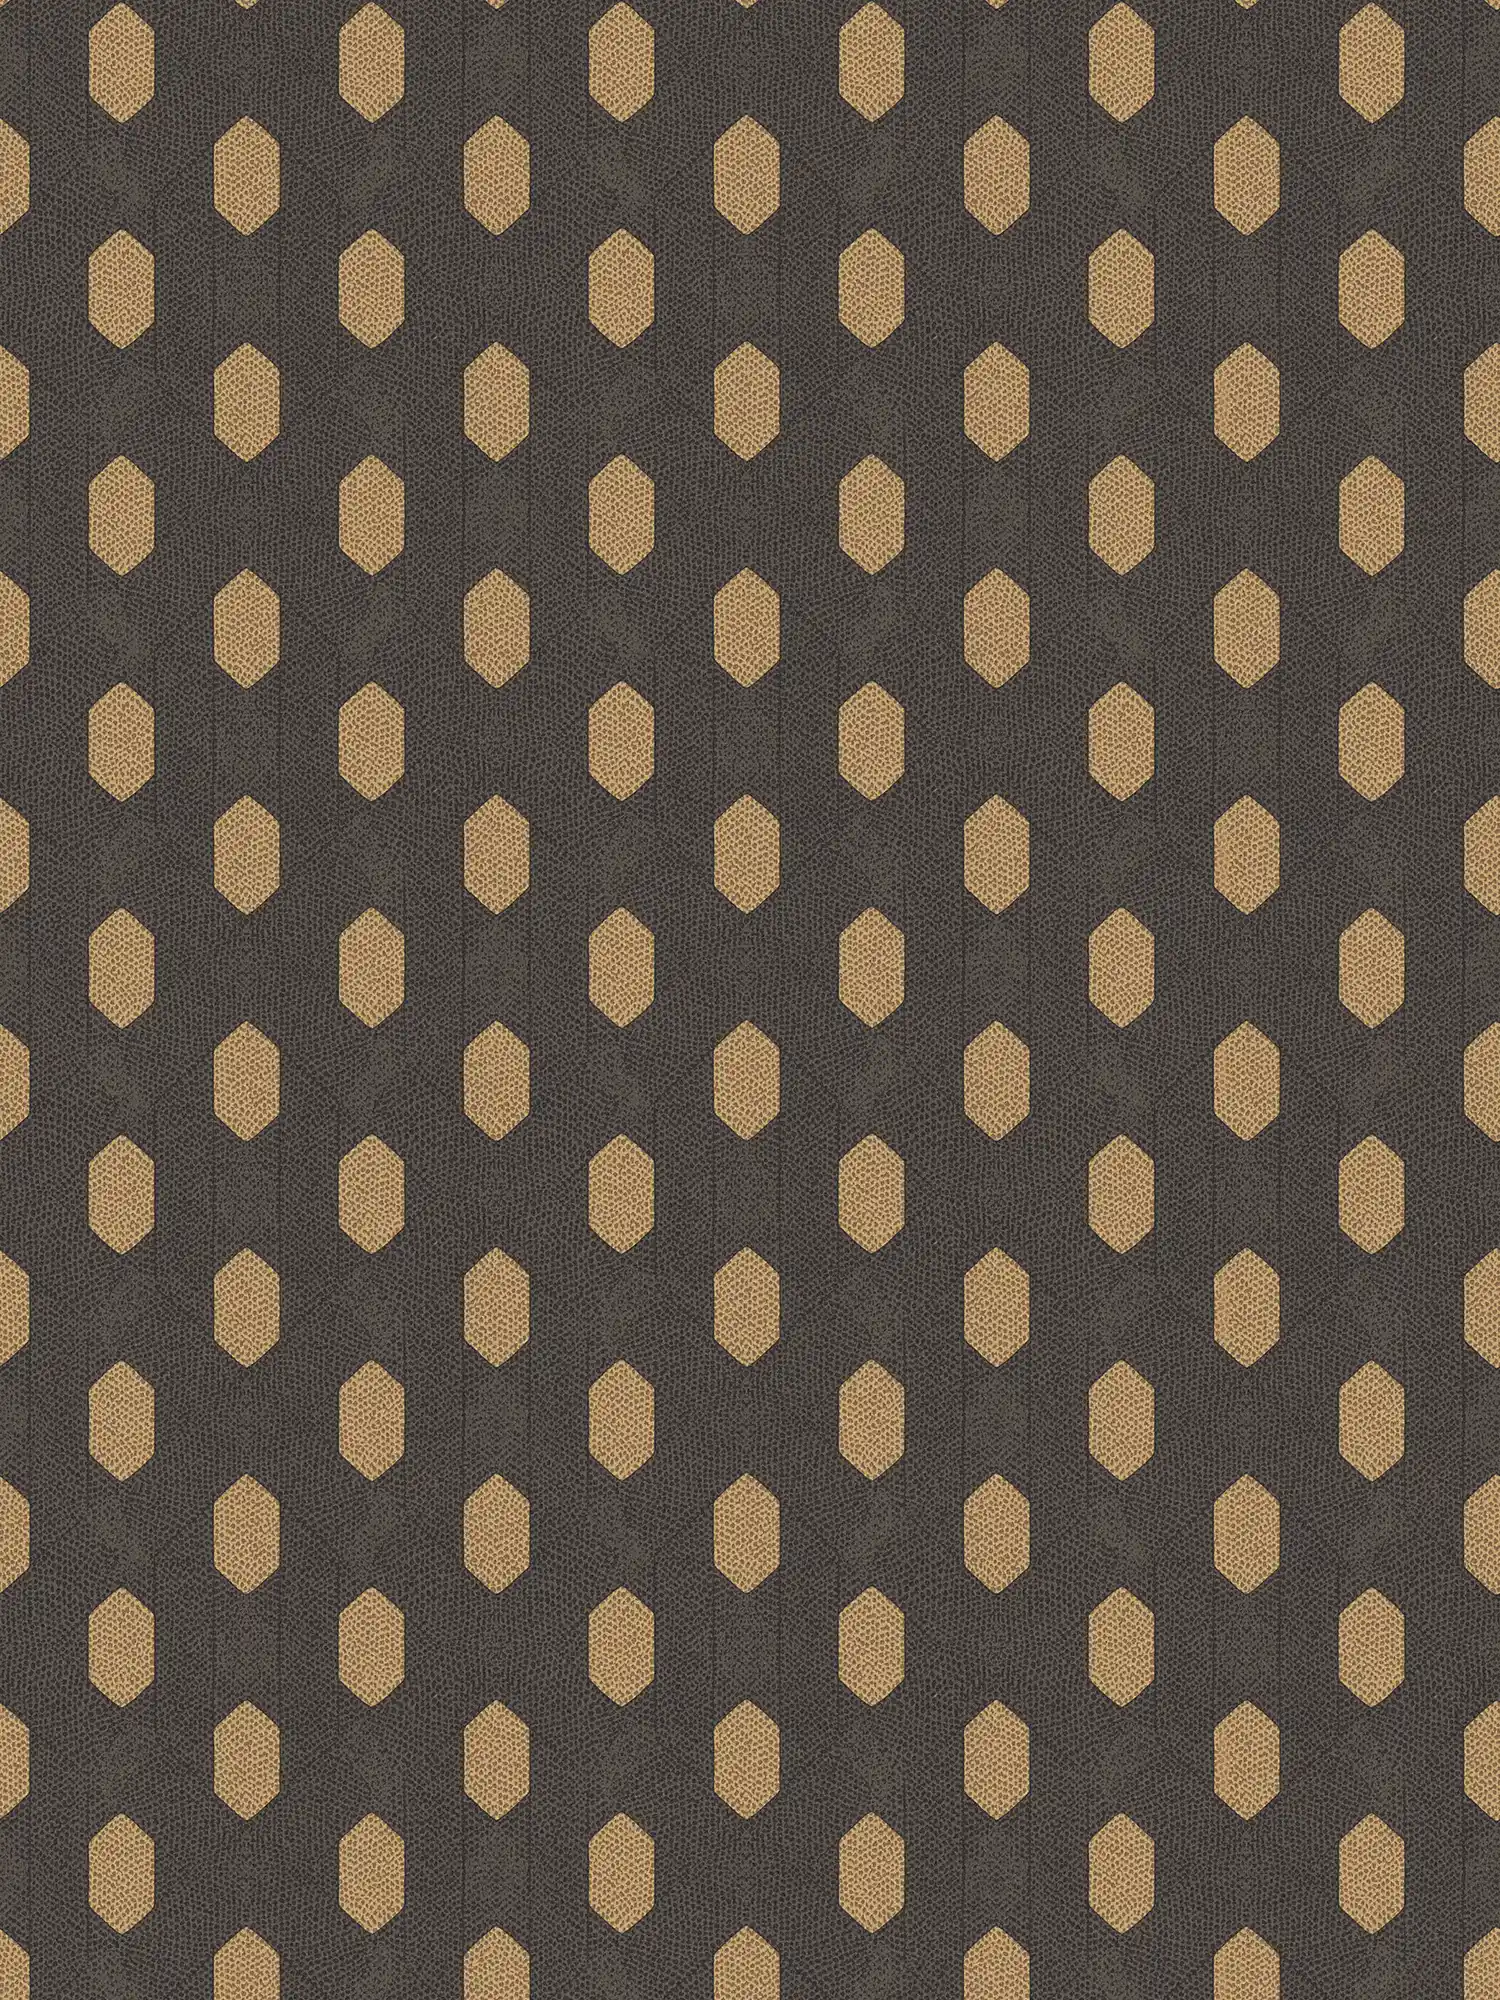 Elegant plain wallpaper with golden pattern - black, gold, brown
